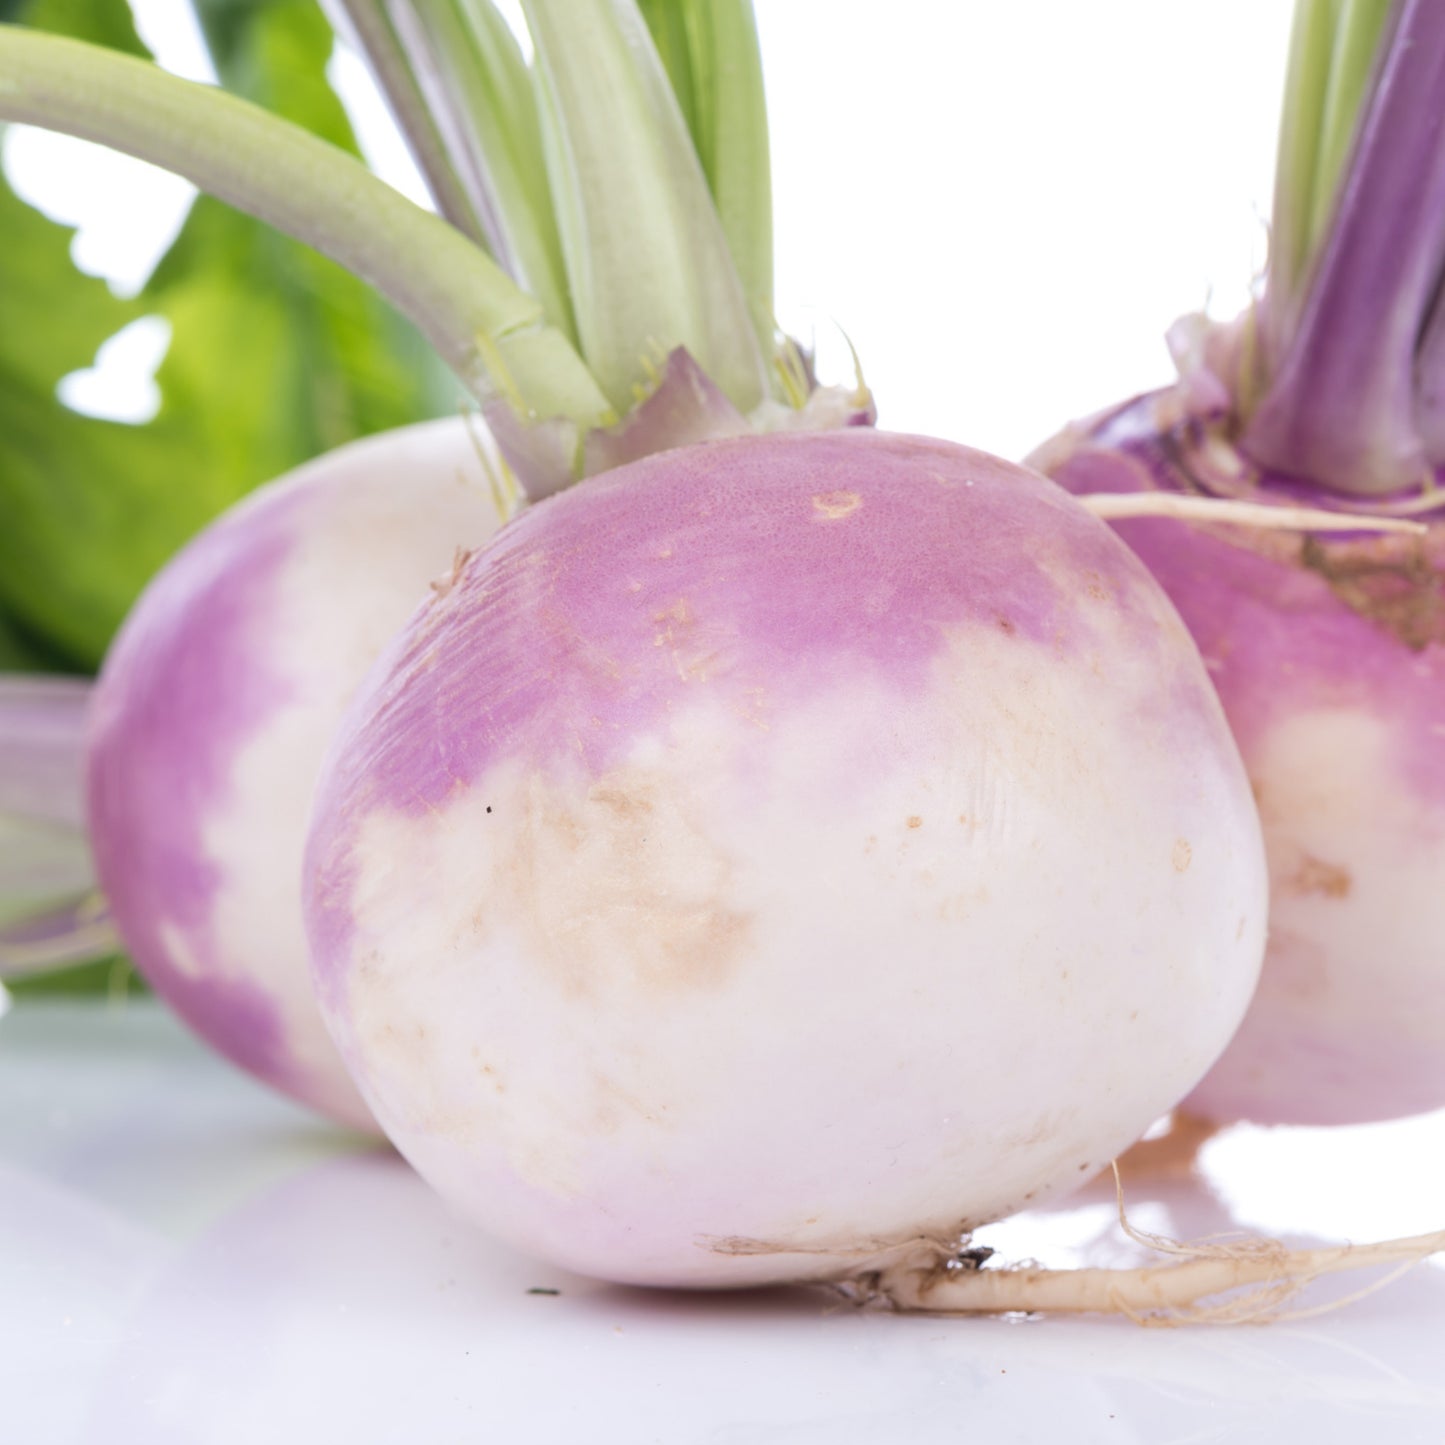 Purple Top Turnips - Seeds - Organic - Non Gmo - Heirloom Seeds – Vegetable Seeds - USA Garden Seeds